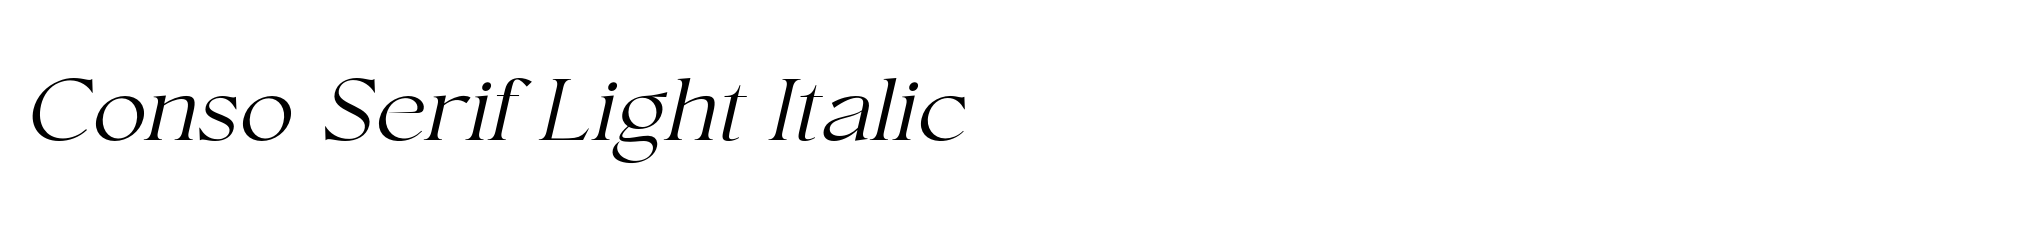 Conso Serif Light Italic image